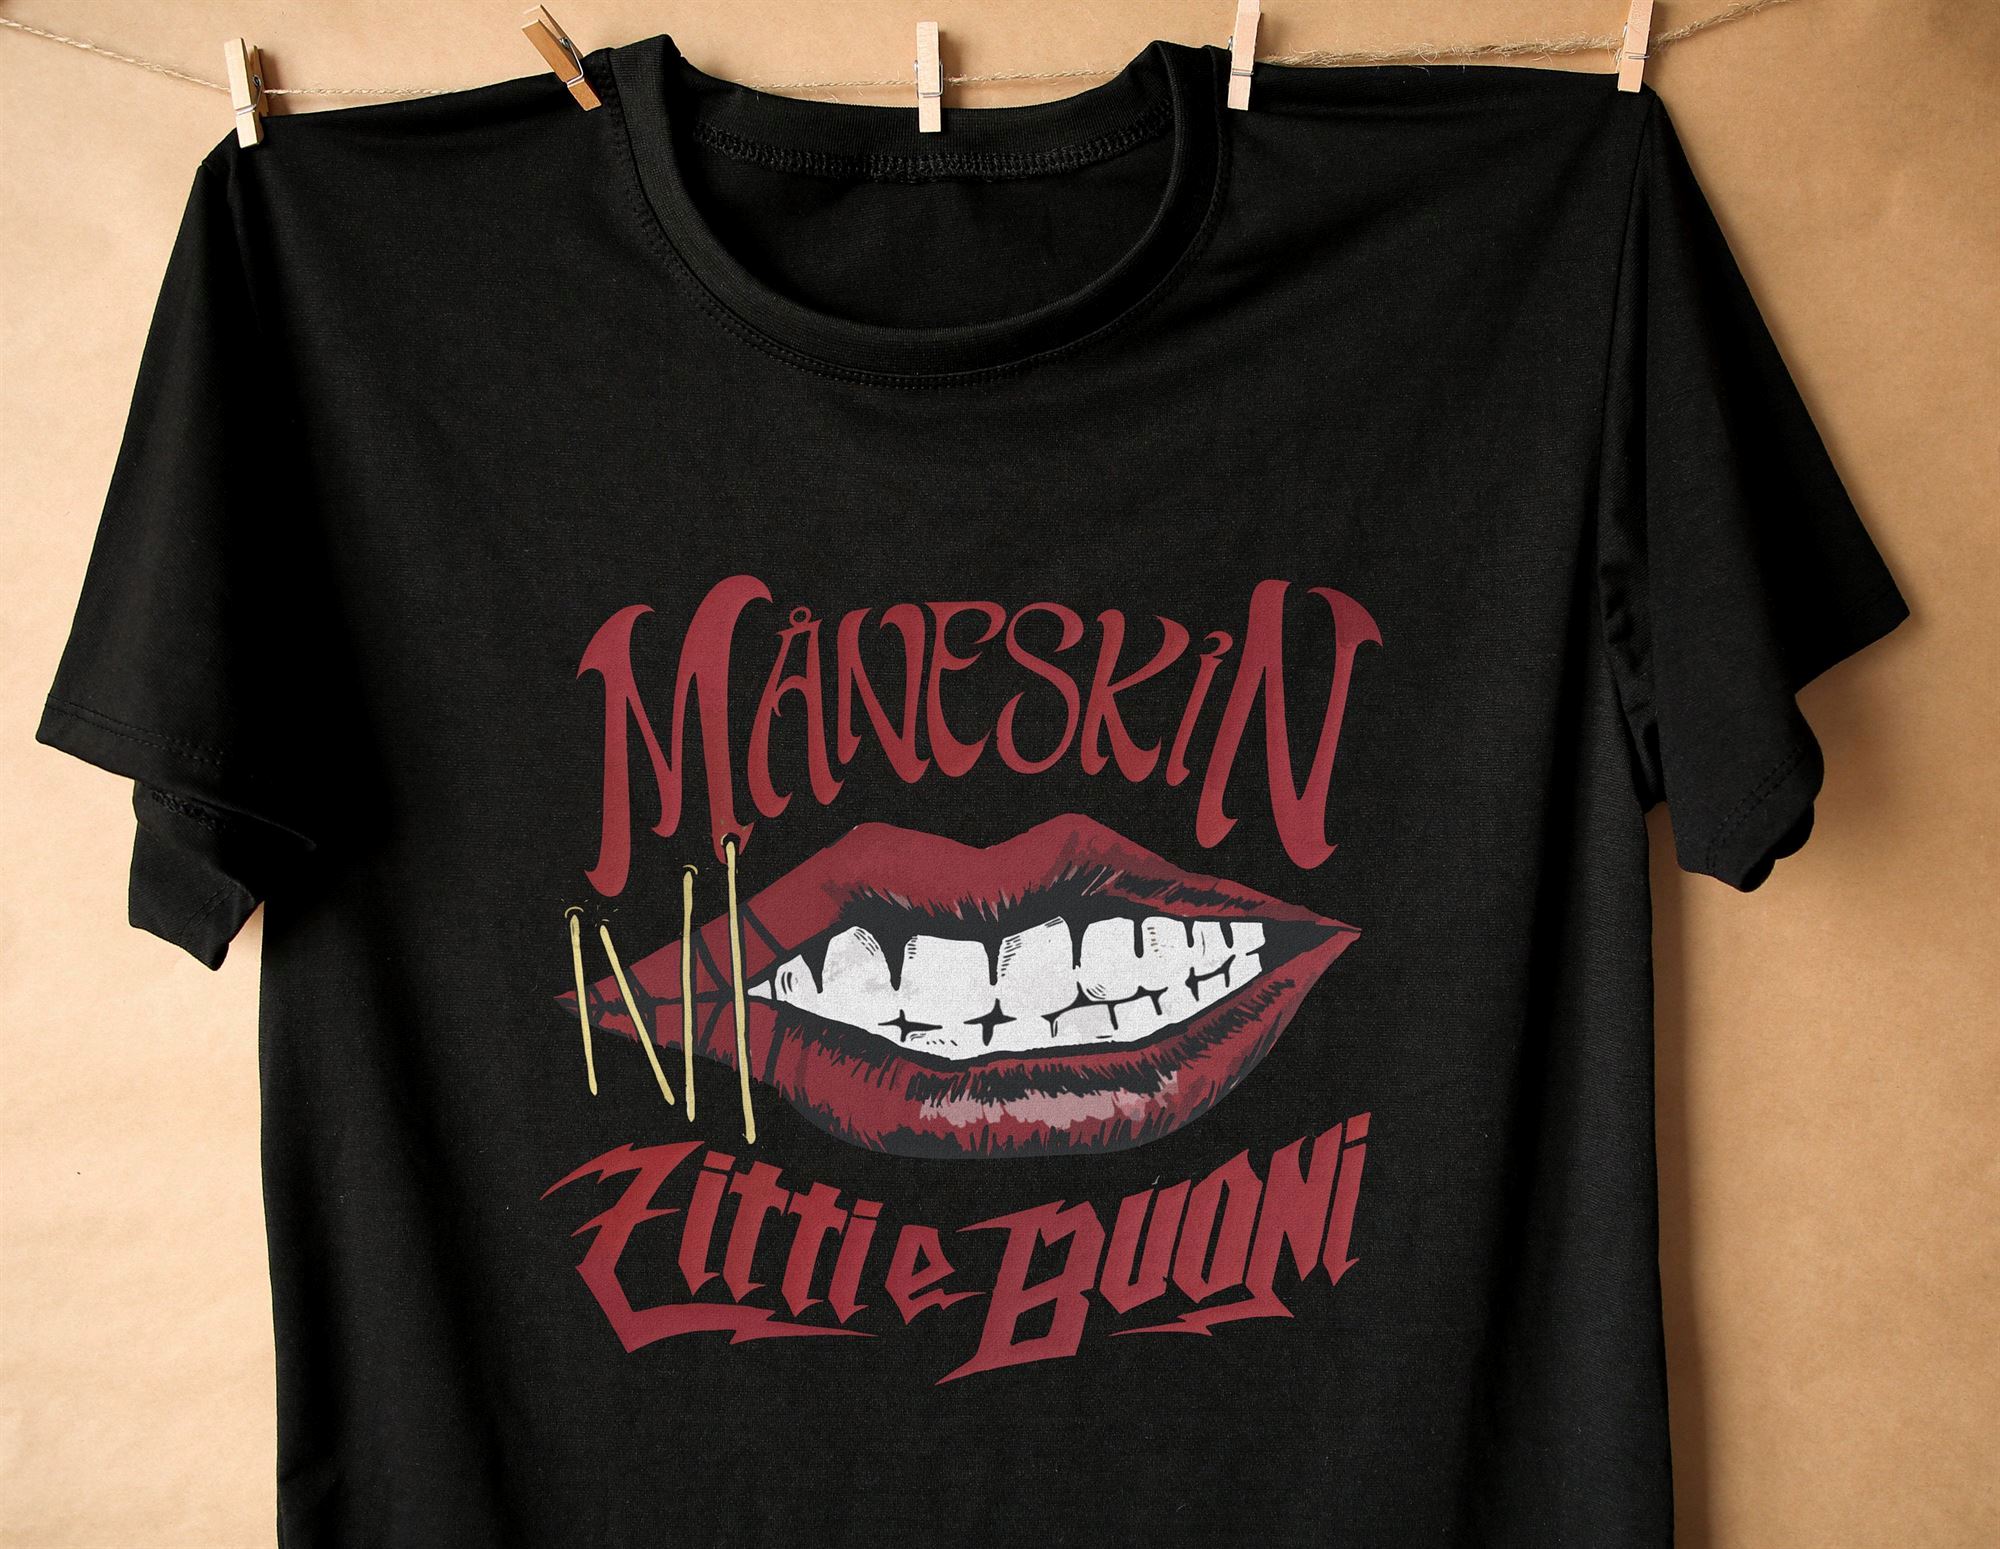 Great Maneskin Shirt Maneskin Band Shirtmaneskin Fans Shirt Maneskin Zitti E Buoni T-shirtdamiano David Maneskin T-shirt 8oq25 